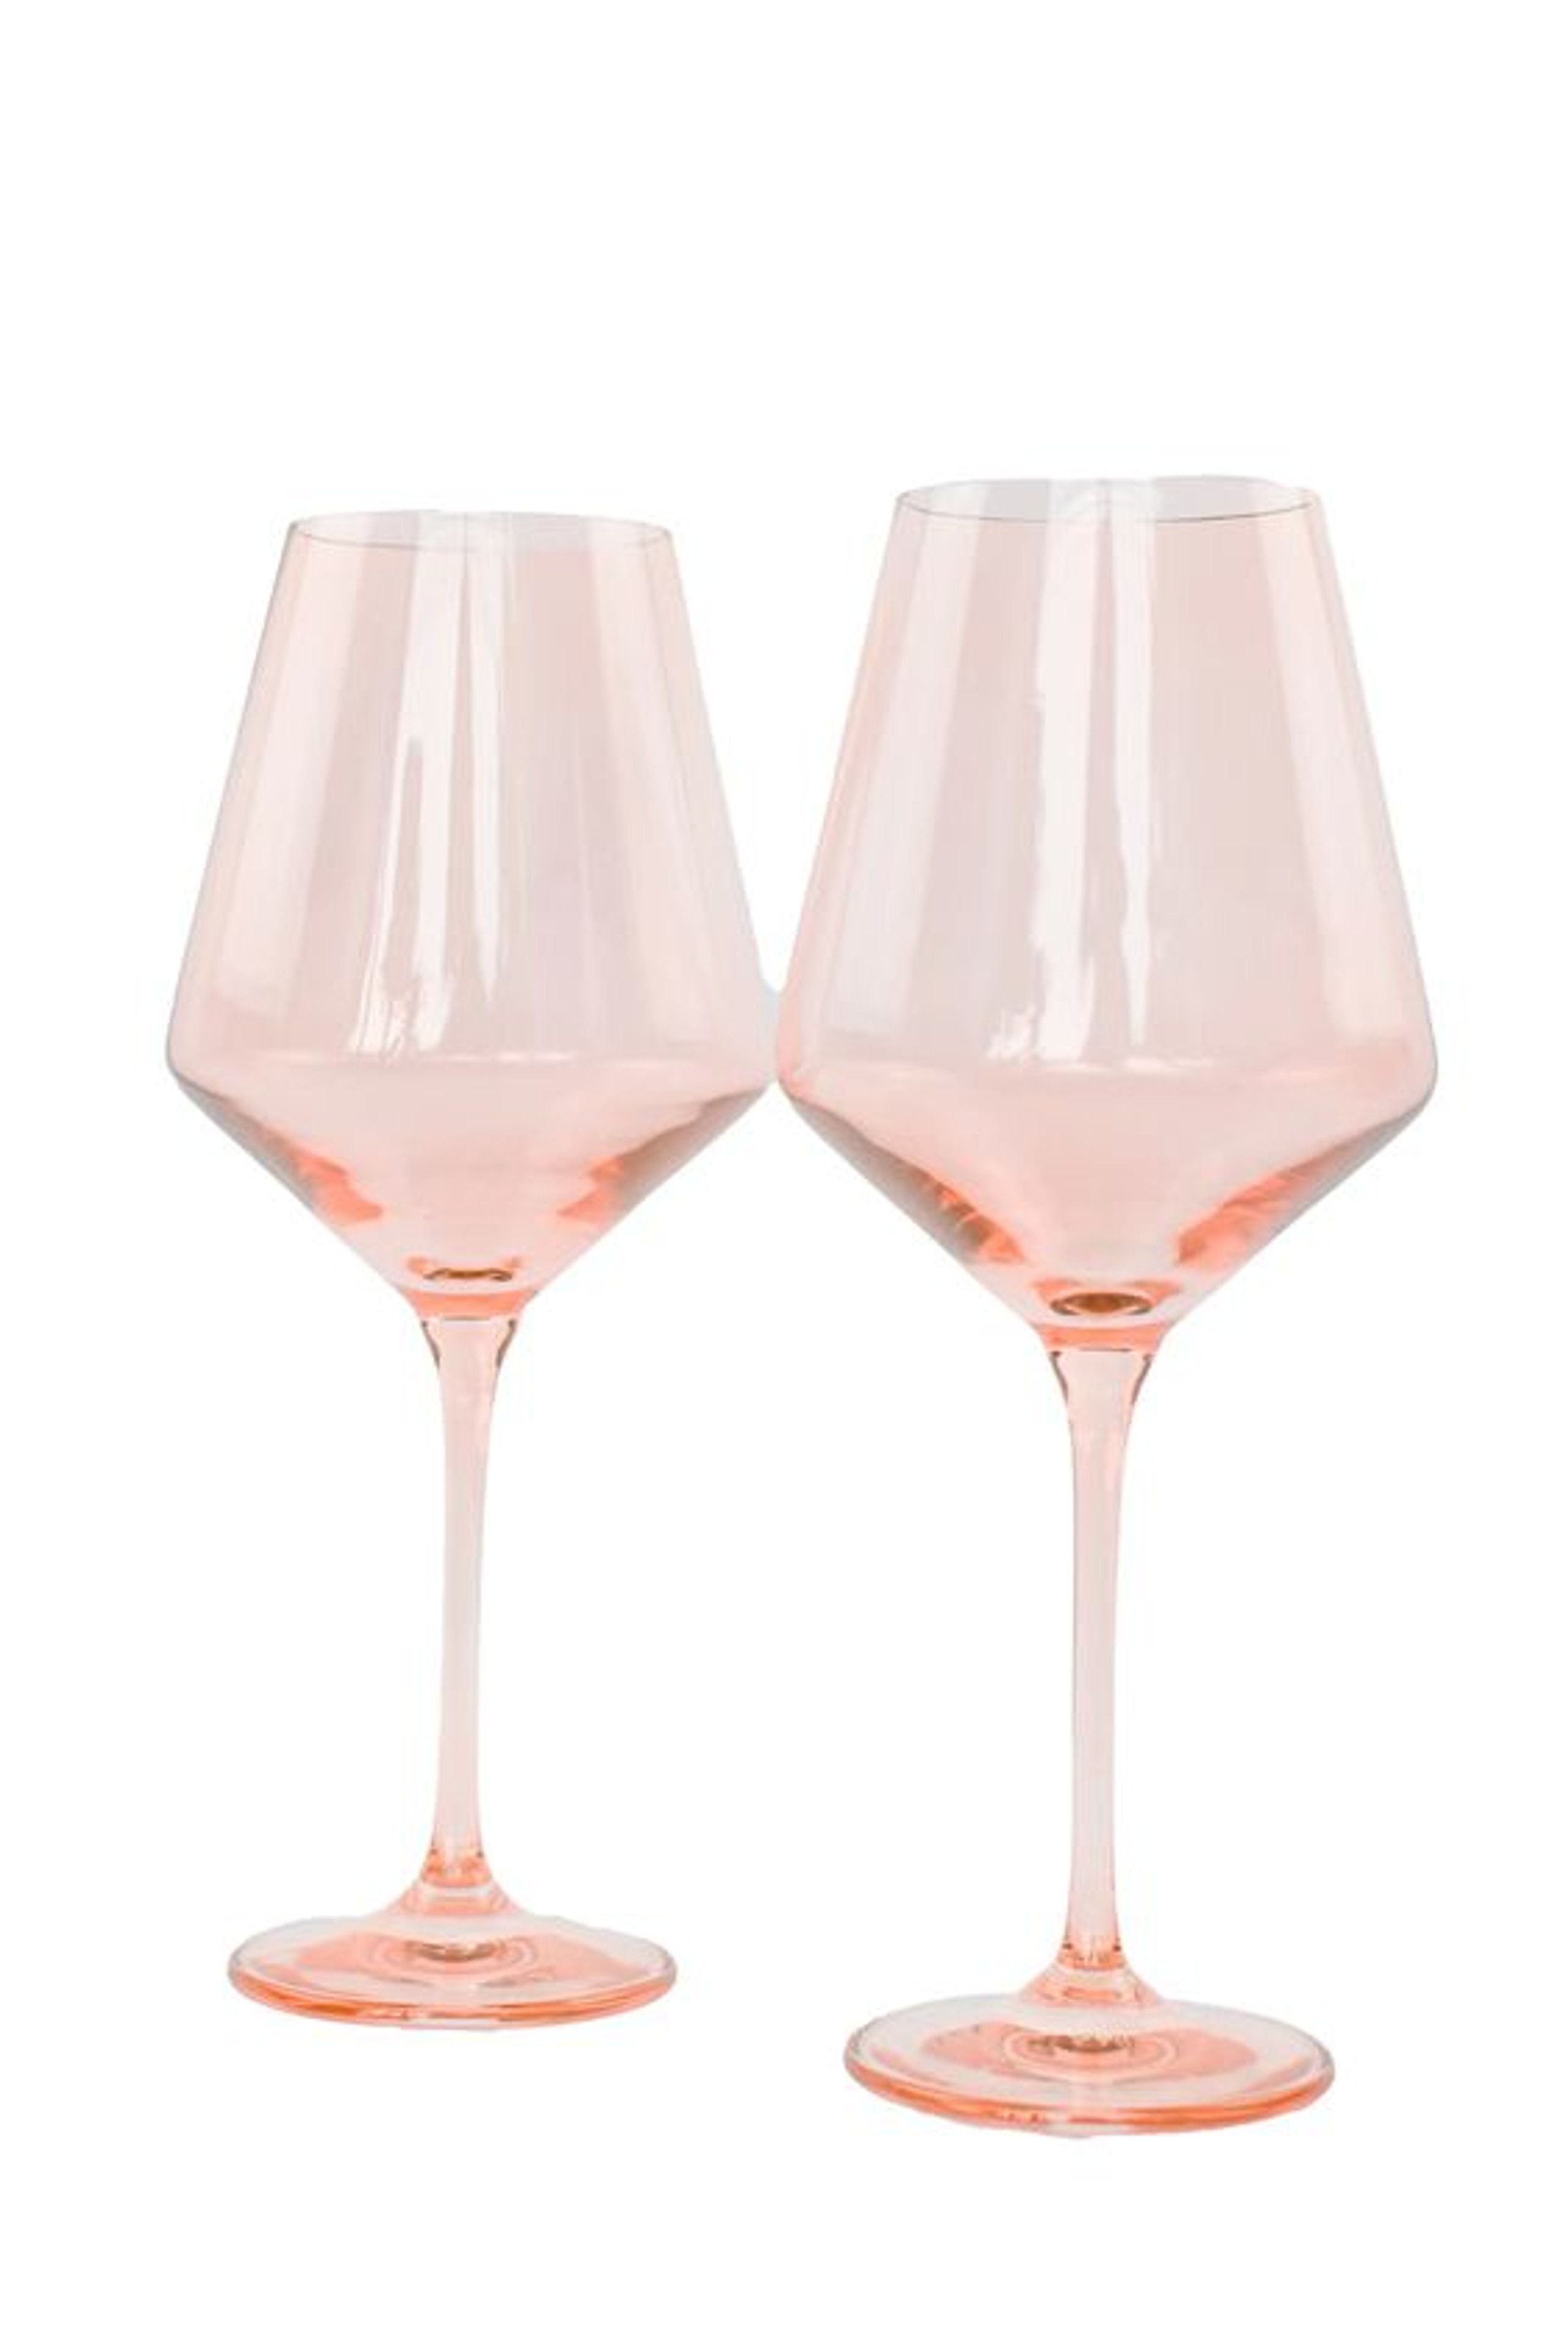 Estelle Colored Stemware Set of 2, Blush Pink | Monkee's of Mount Pleasant